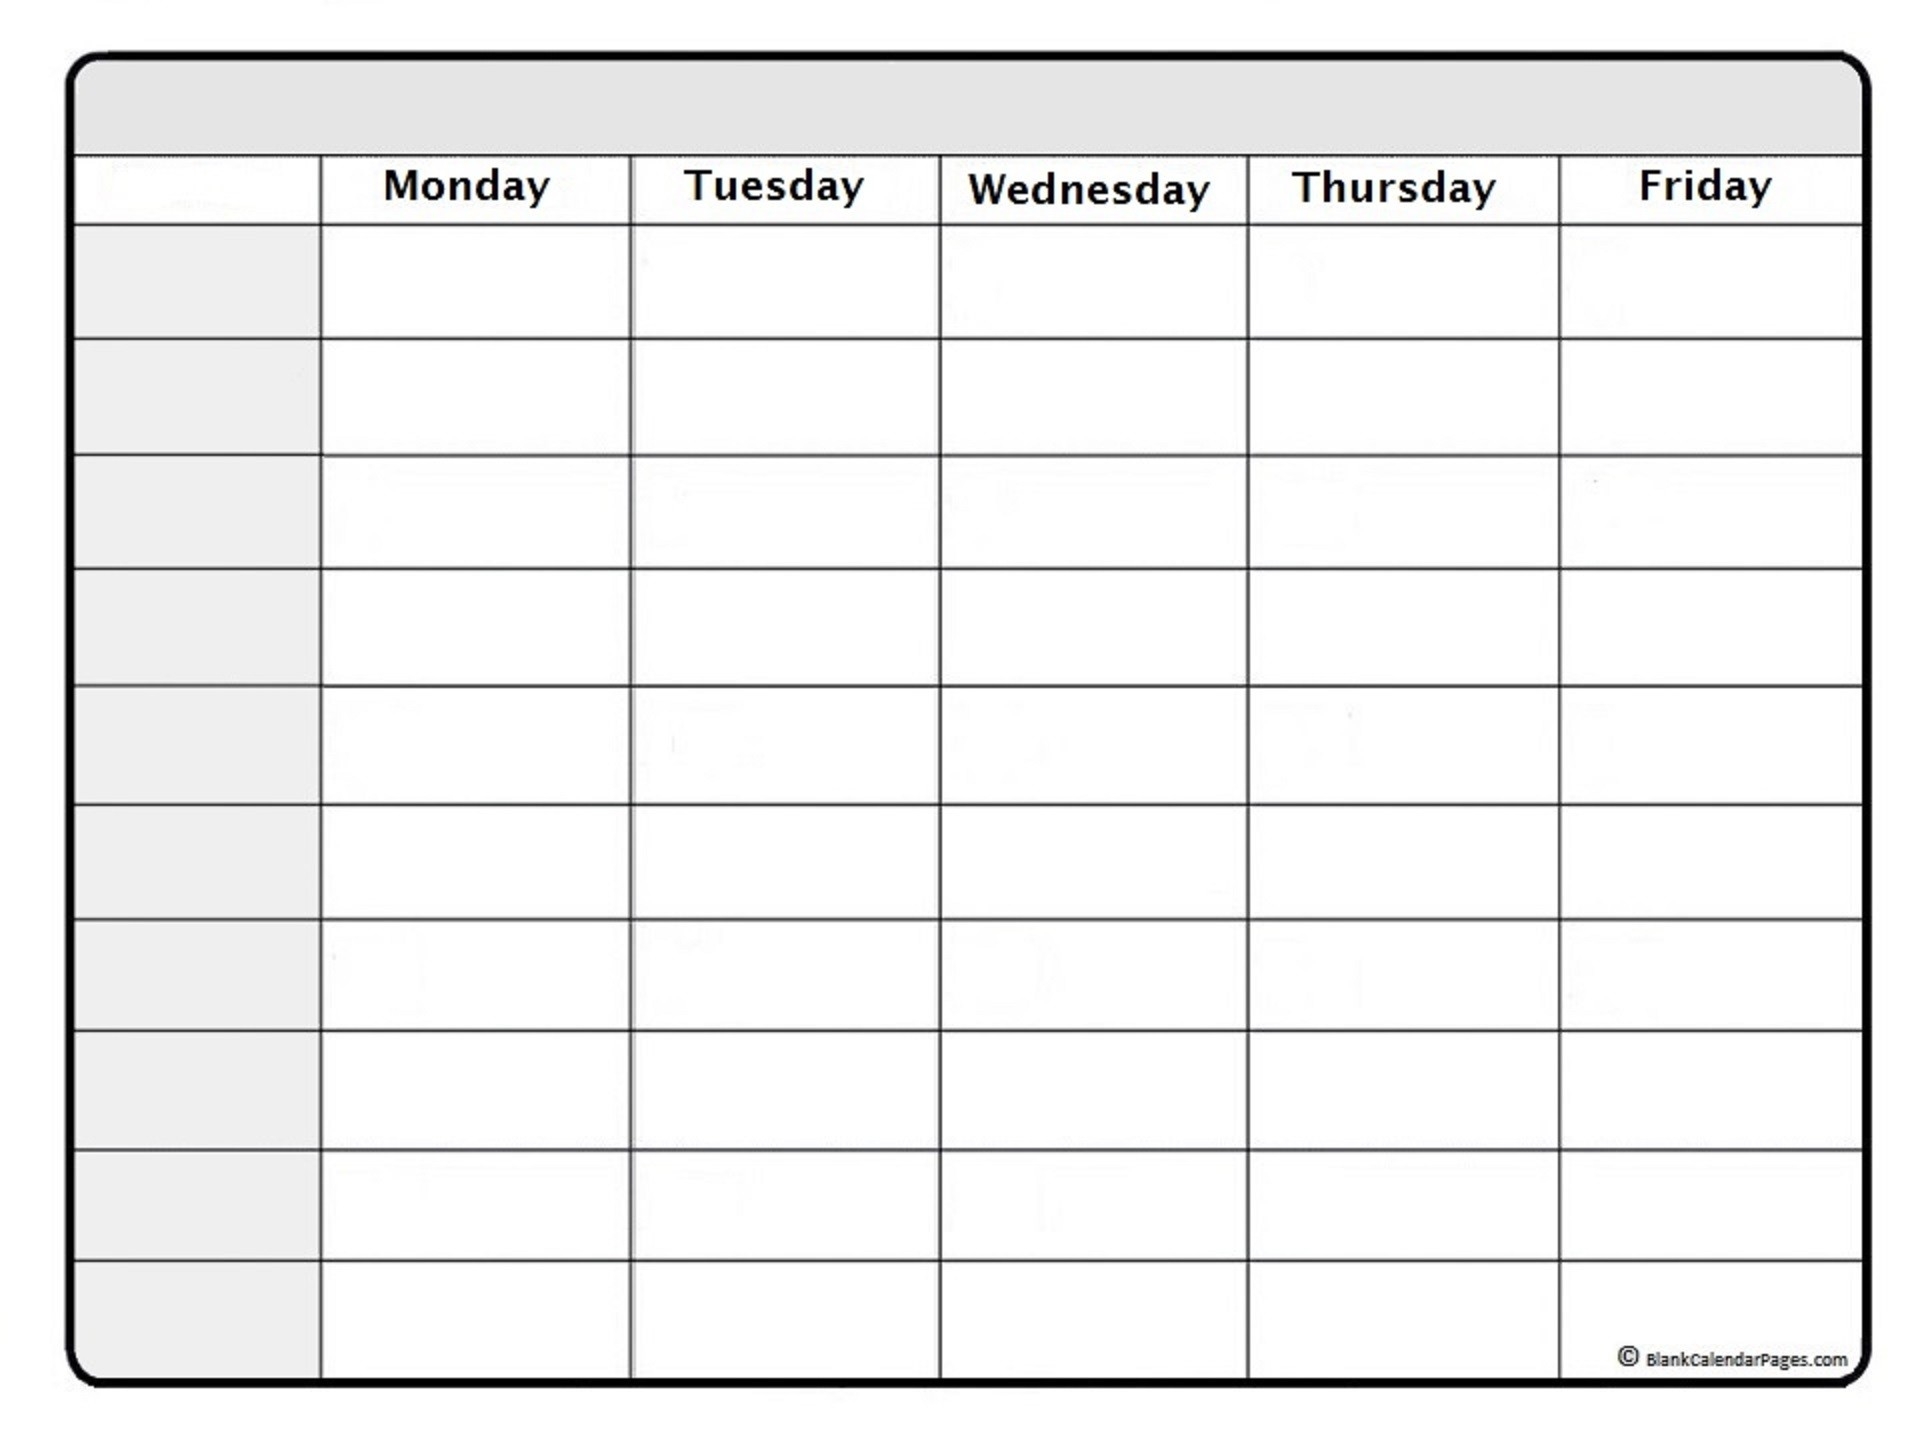 May 2020 Weekly Calendar | May 2020 Weekly Calendar Template  Weekly Calendar 2020